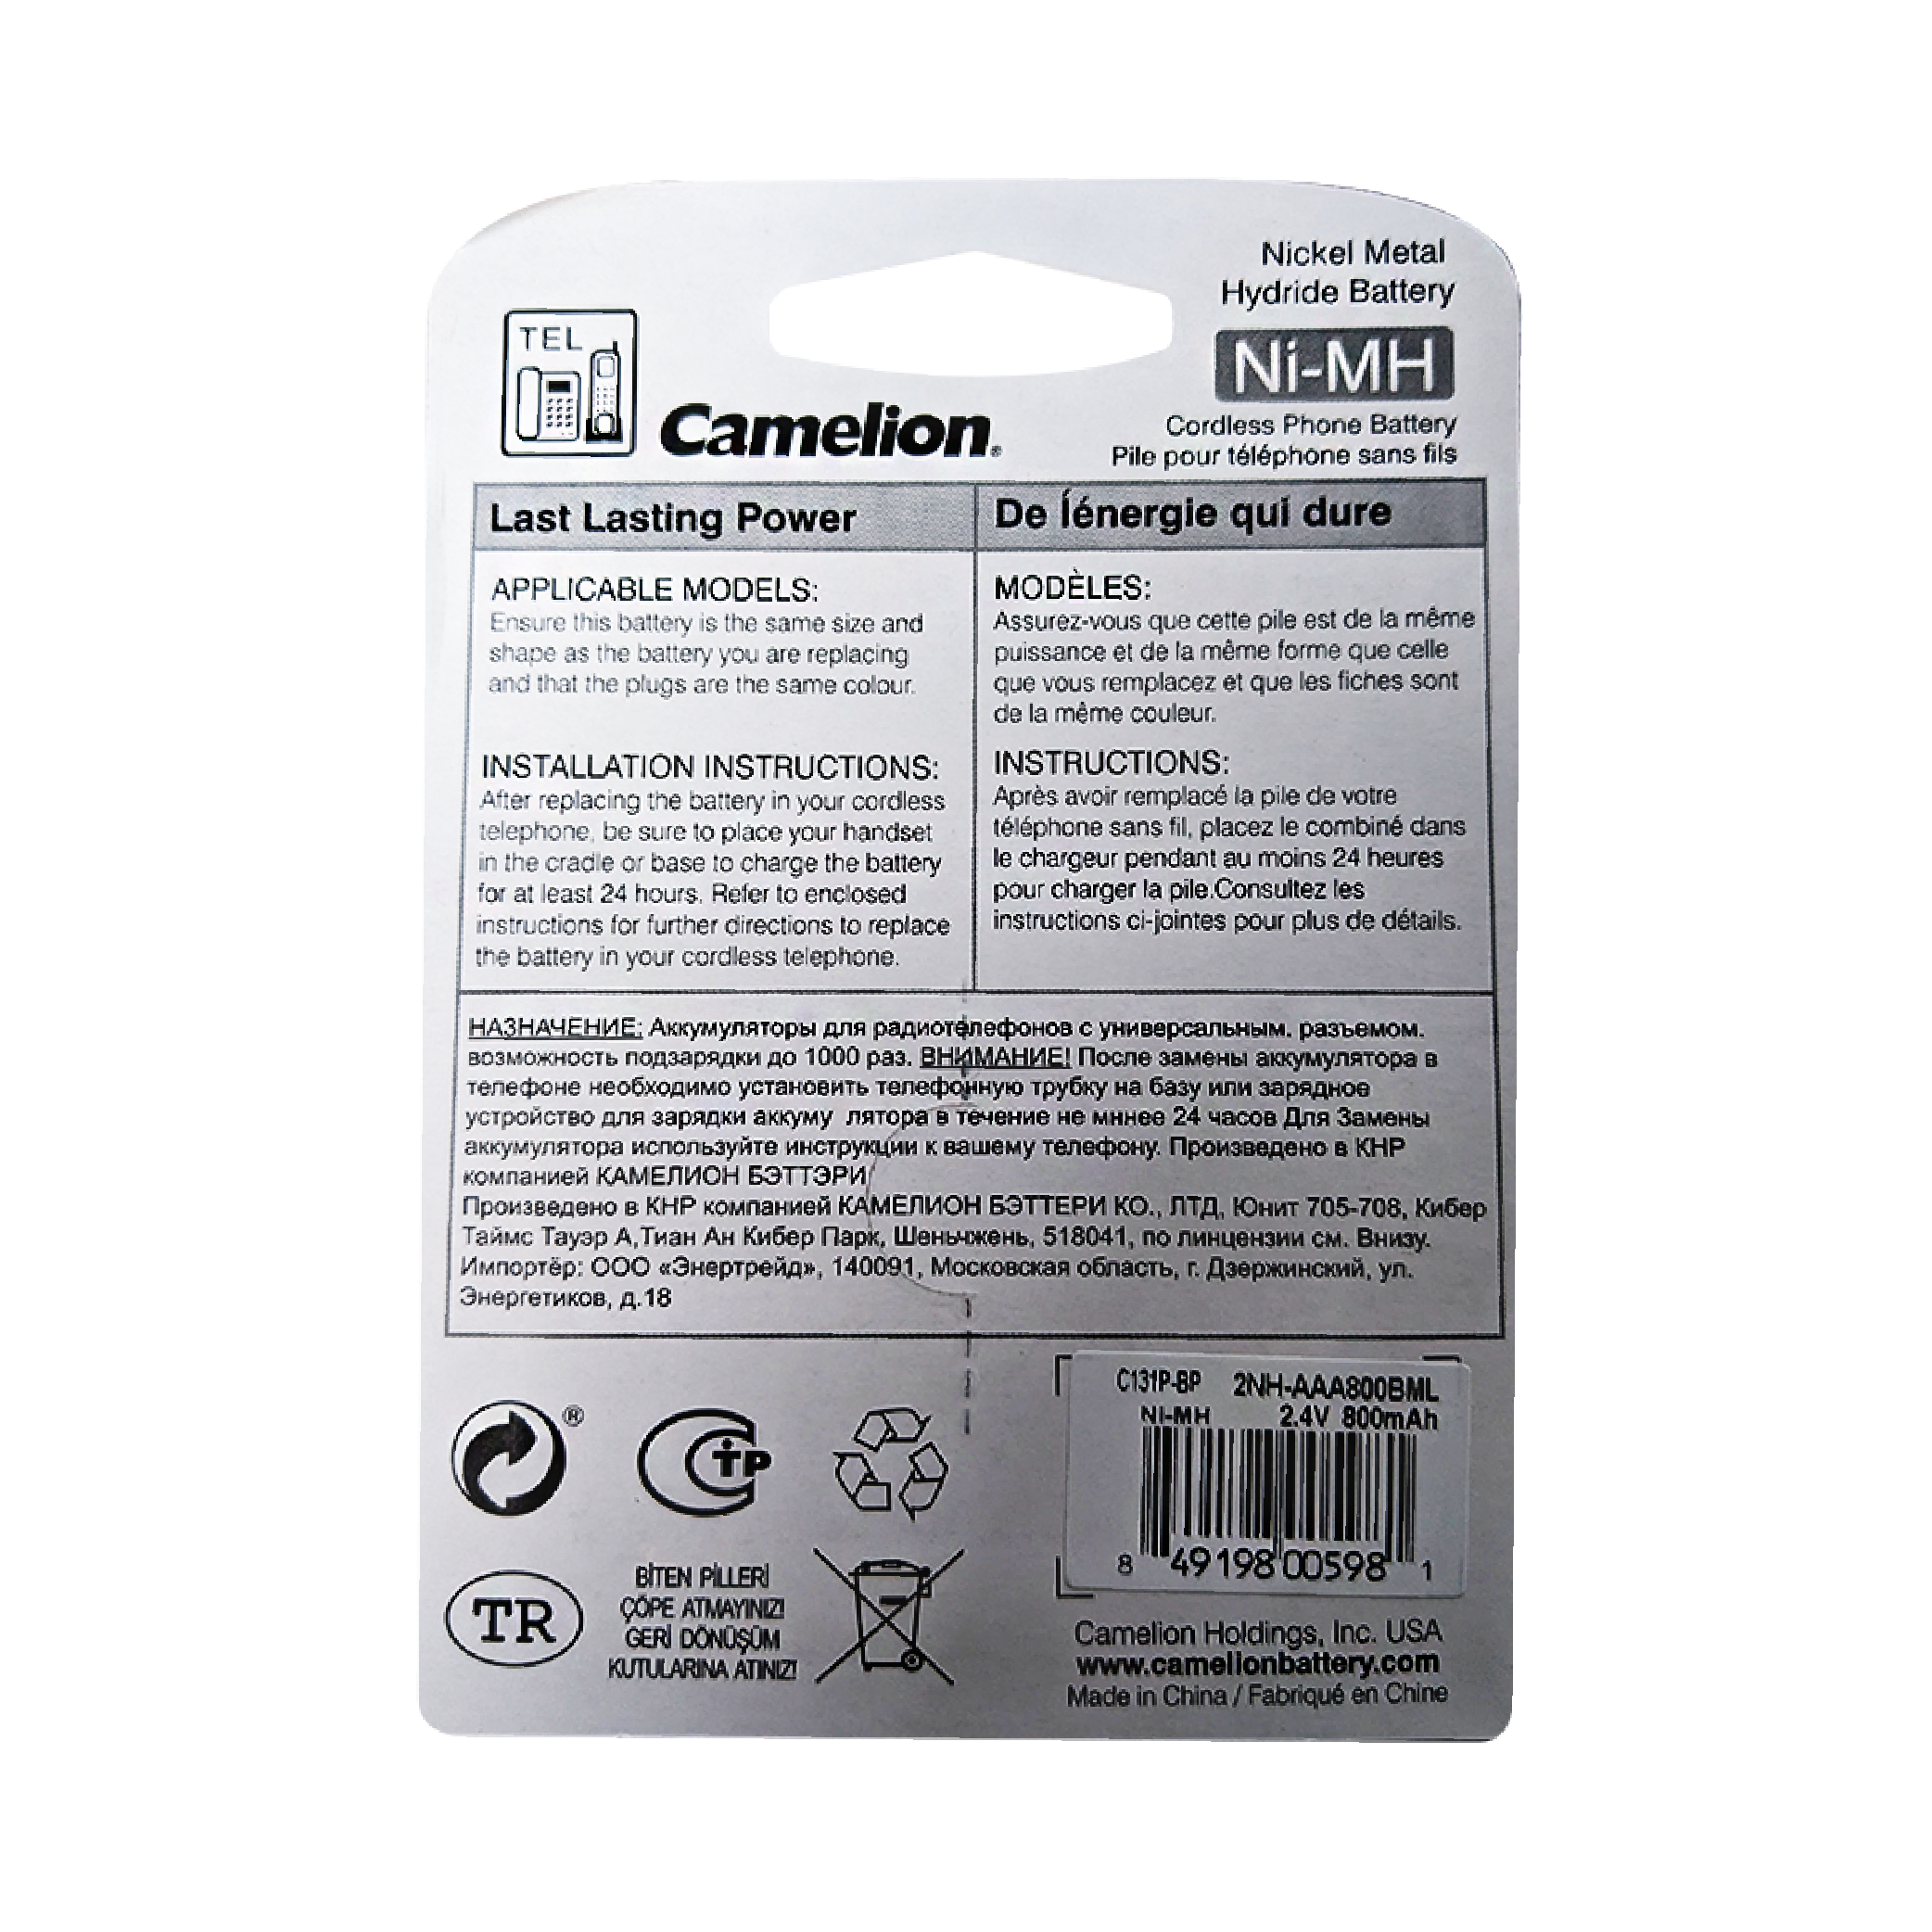 Camelion C131P Cordless Phone Battery